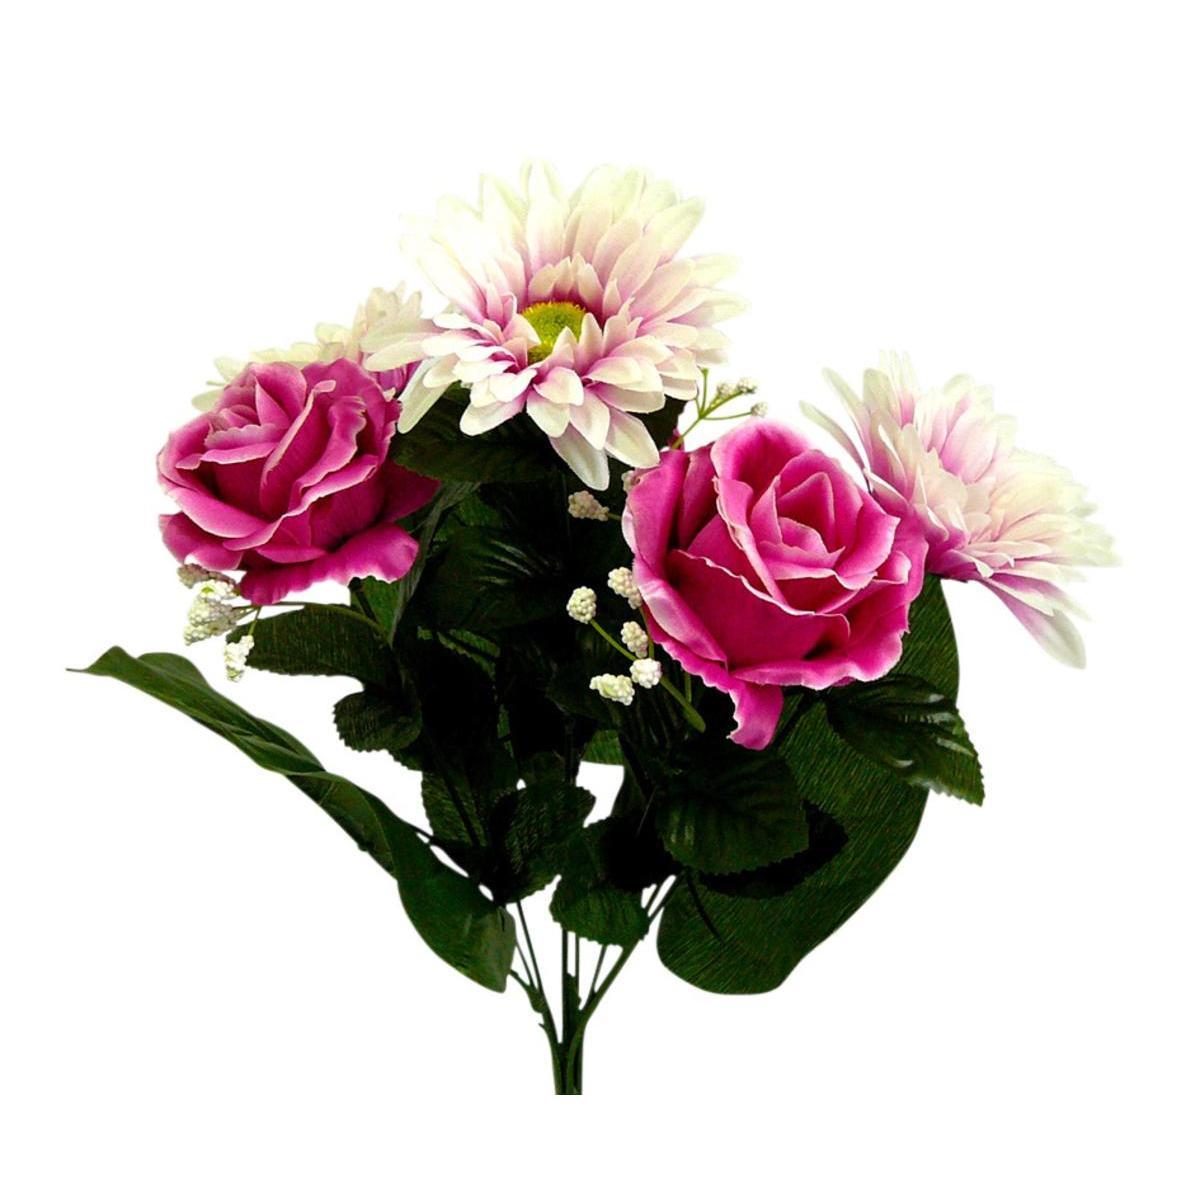 Bouquet de roses et de gerberas - 3 assortiments